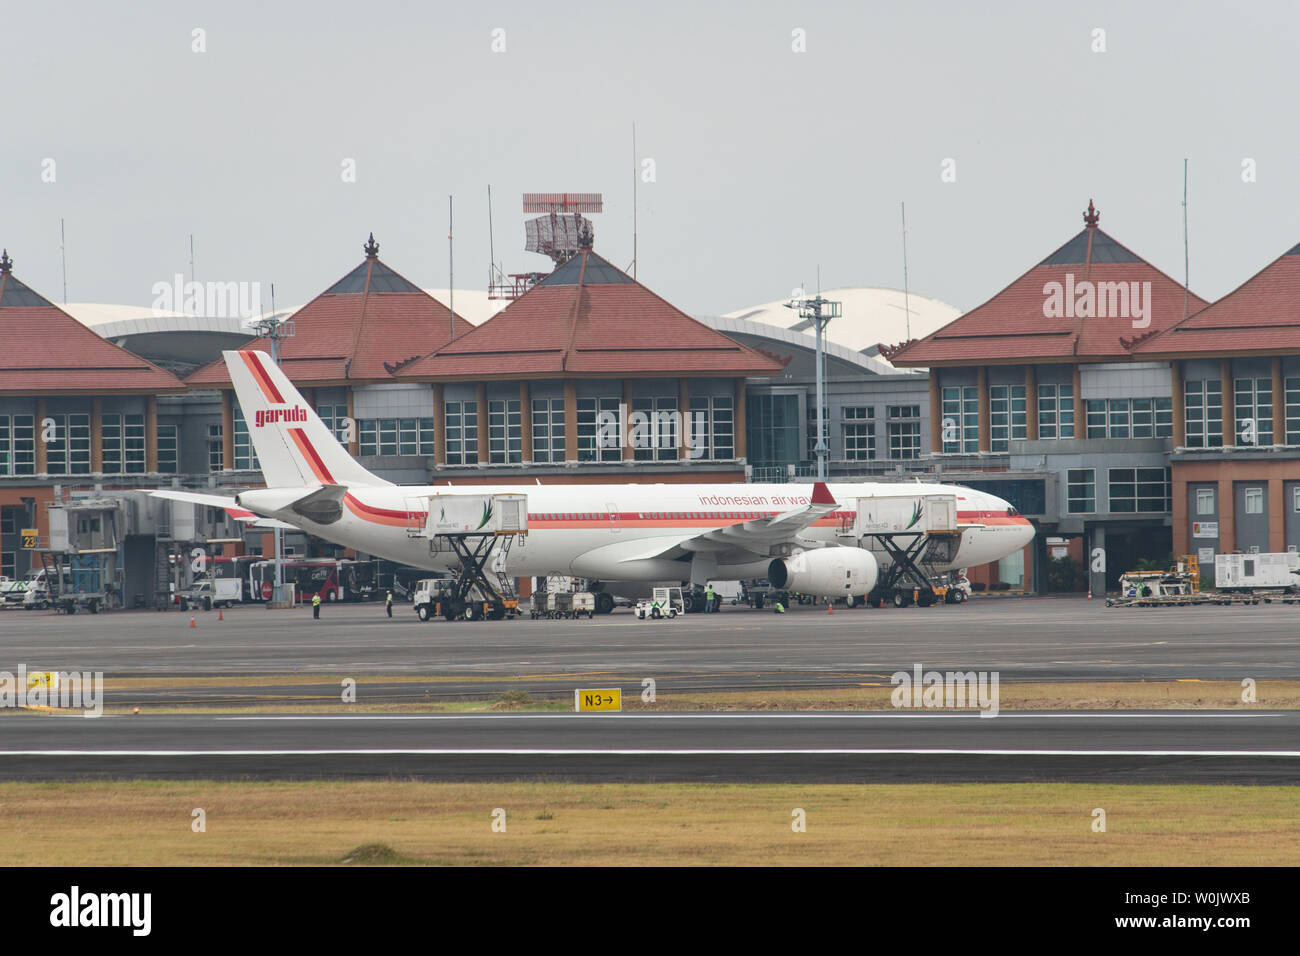 DENPASAR,BALI/INDONESIA-JUNE 08 2019: The old design of Garuda Indonesia Aeroplane prepares for passengers to board, as ground crew prepares the plane Stock Photo